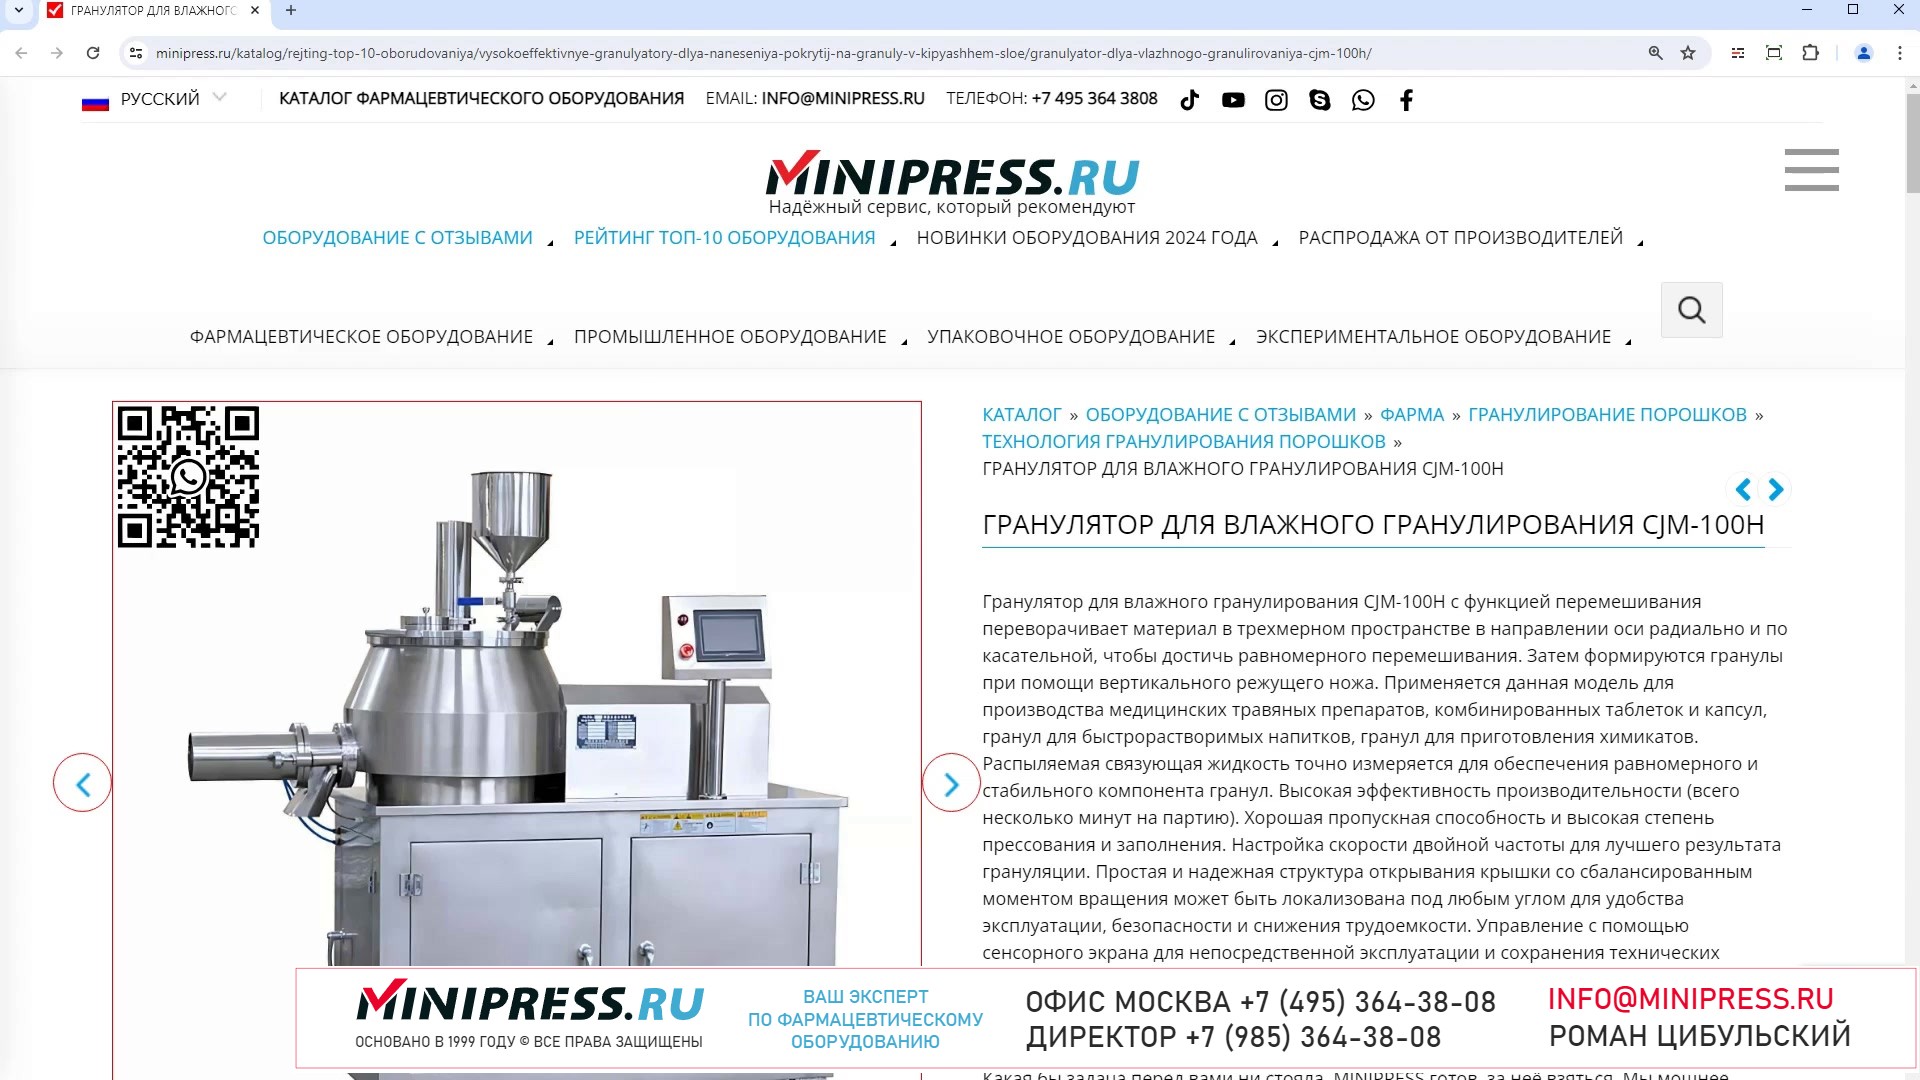 Minipress.ru Гранулятор для влажного гранулирования CJM-100H